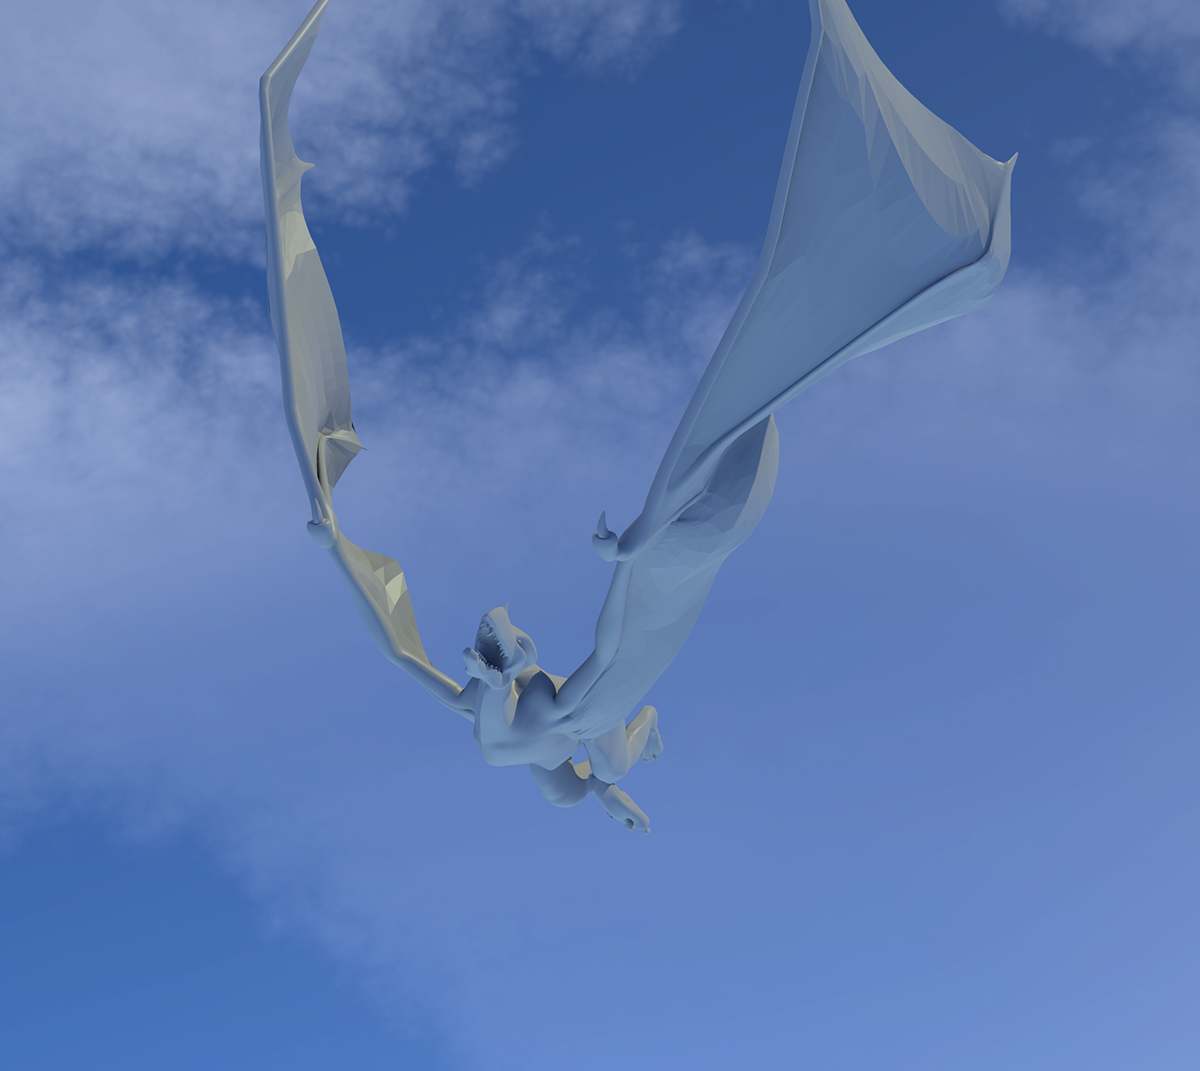 dragon blender modeling 3D wings tail SKY Flying standing Mouth